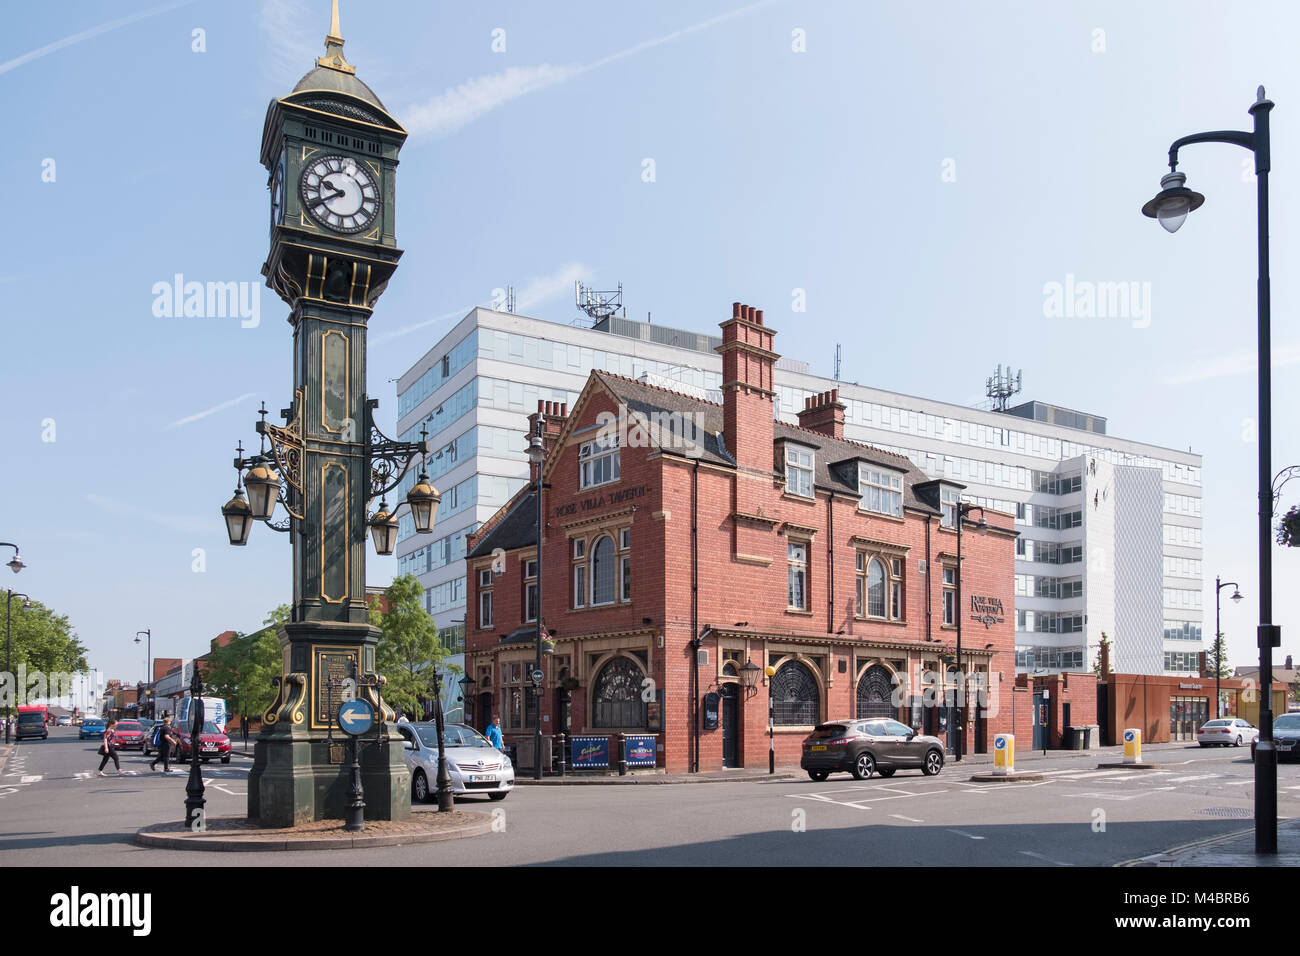 The Jewellery Quarter Clock and Rose Villa Tavern, The Jewellery Quarter of Birmingham, England Stock Photo